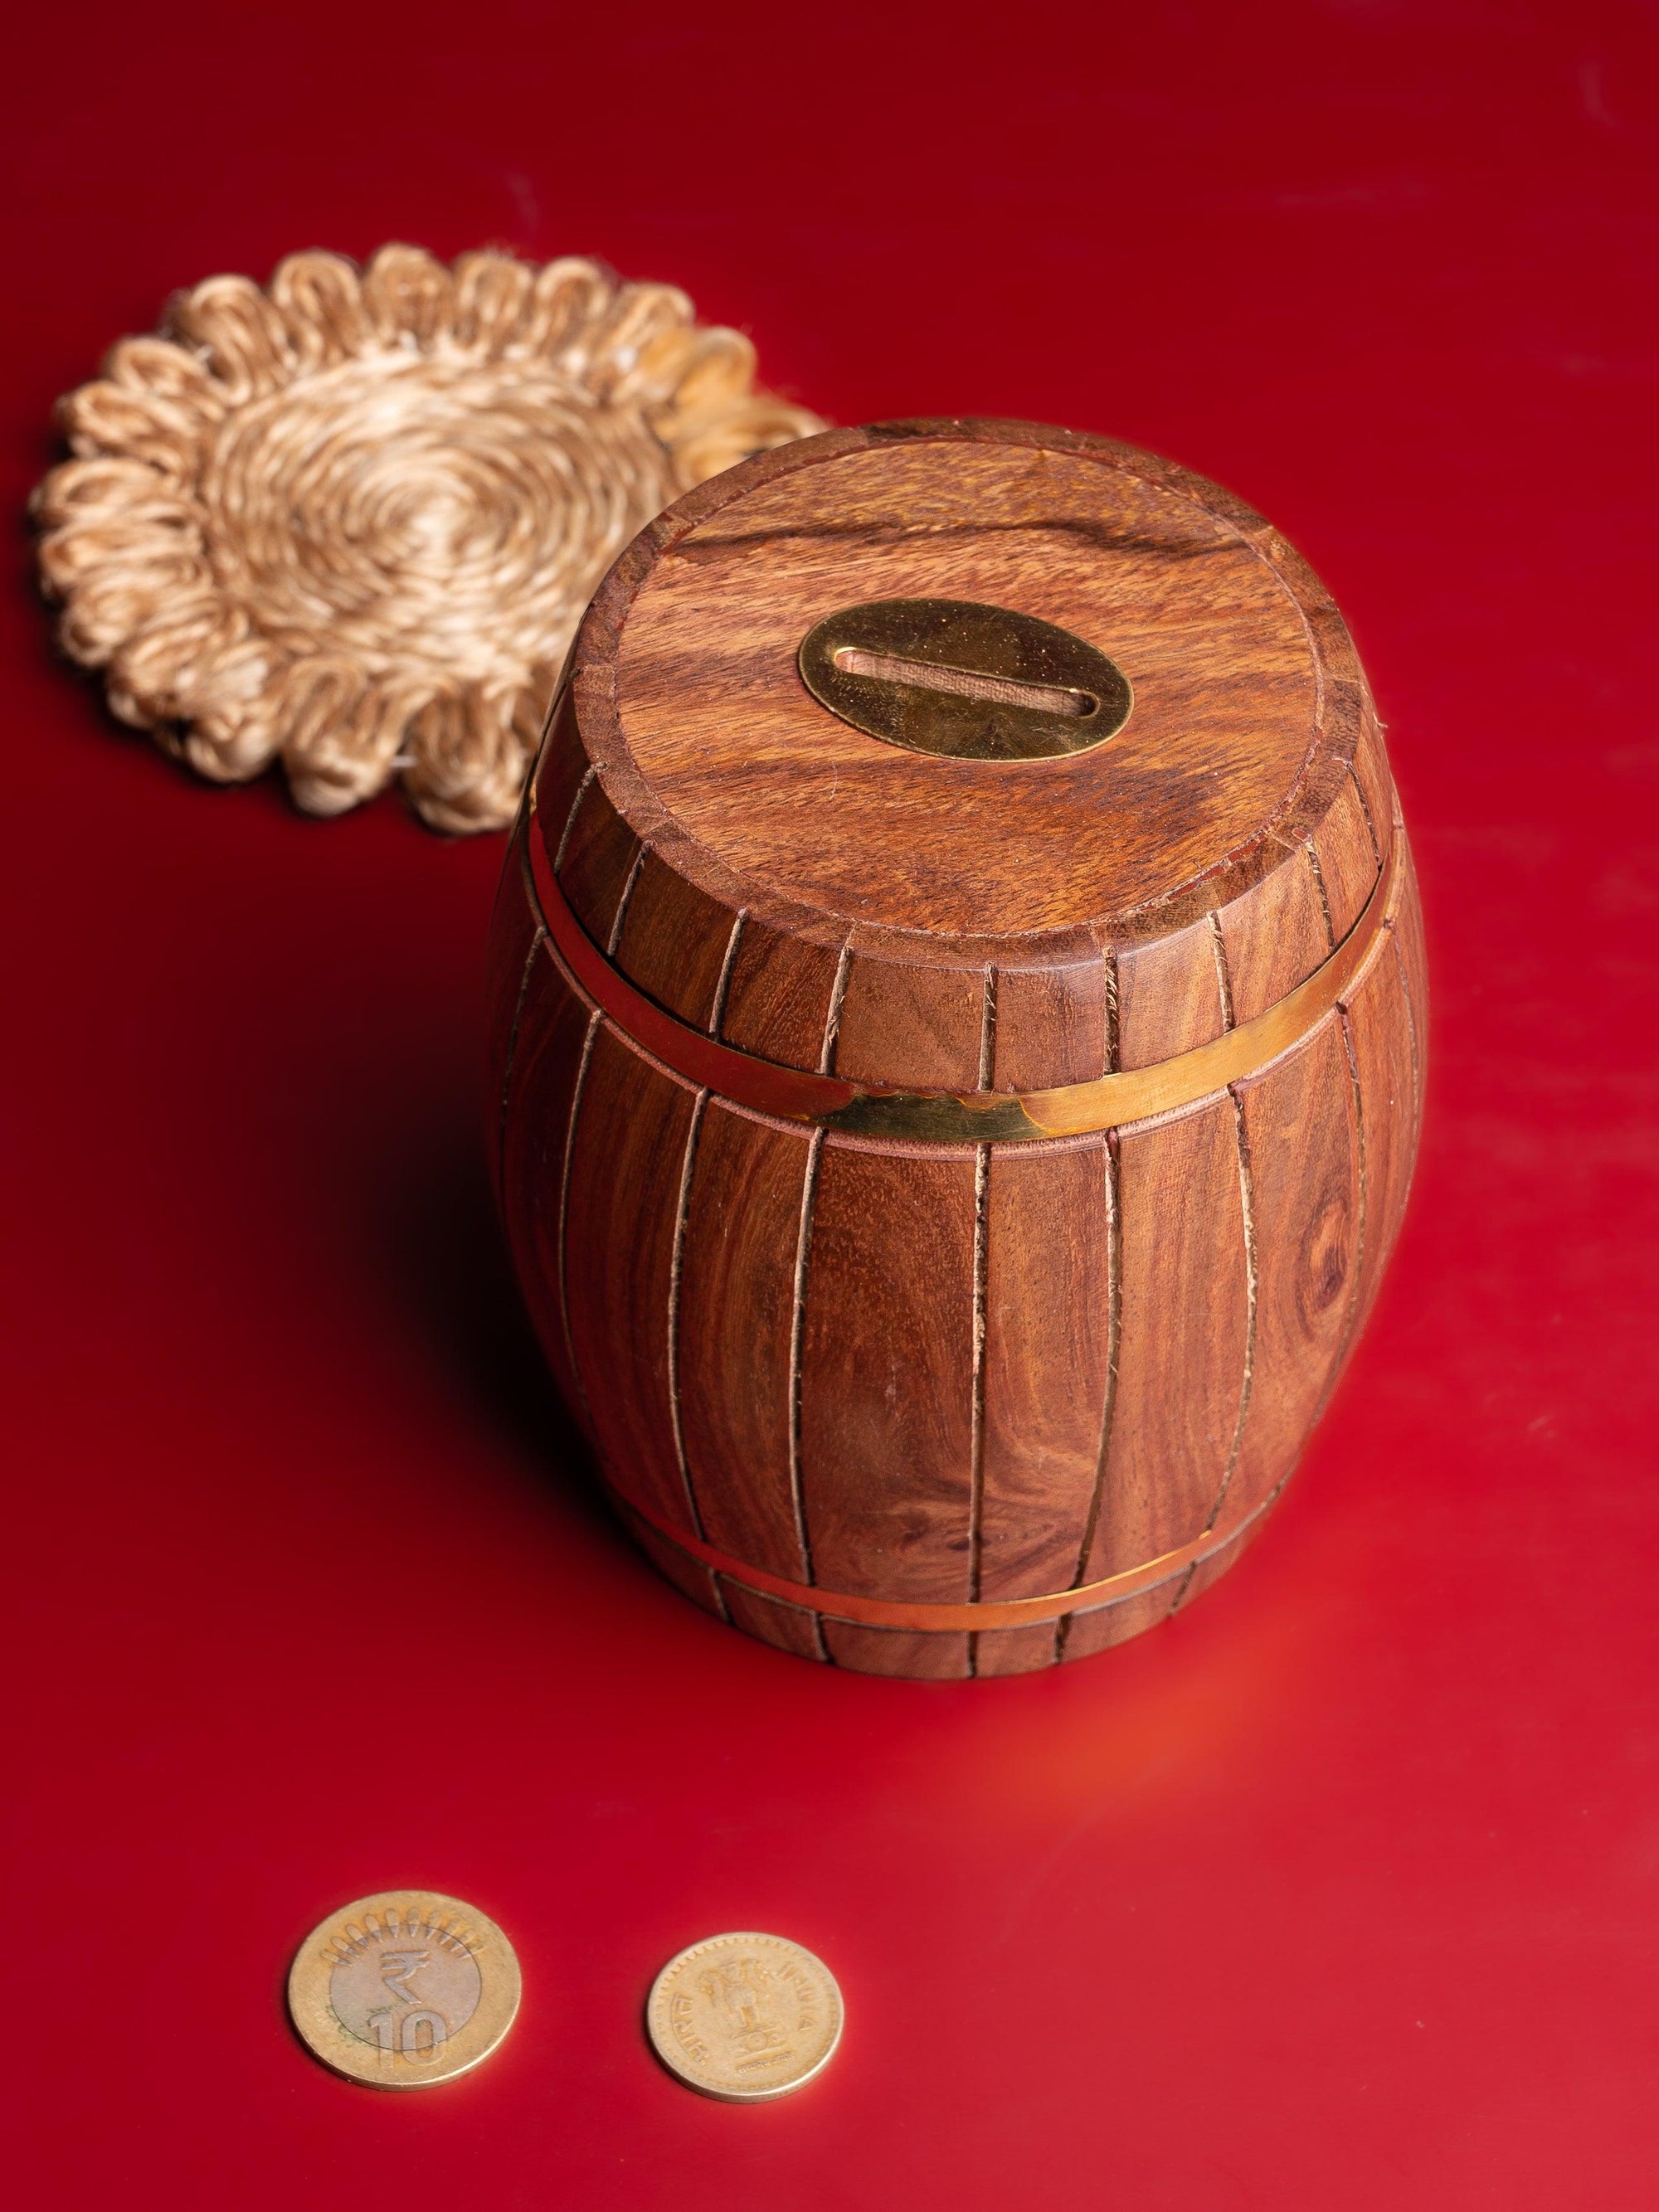 Handmade Wooden Barrel design Money Bank / Piggy Bank / Coin box - The Heritage Artifacts